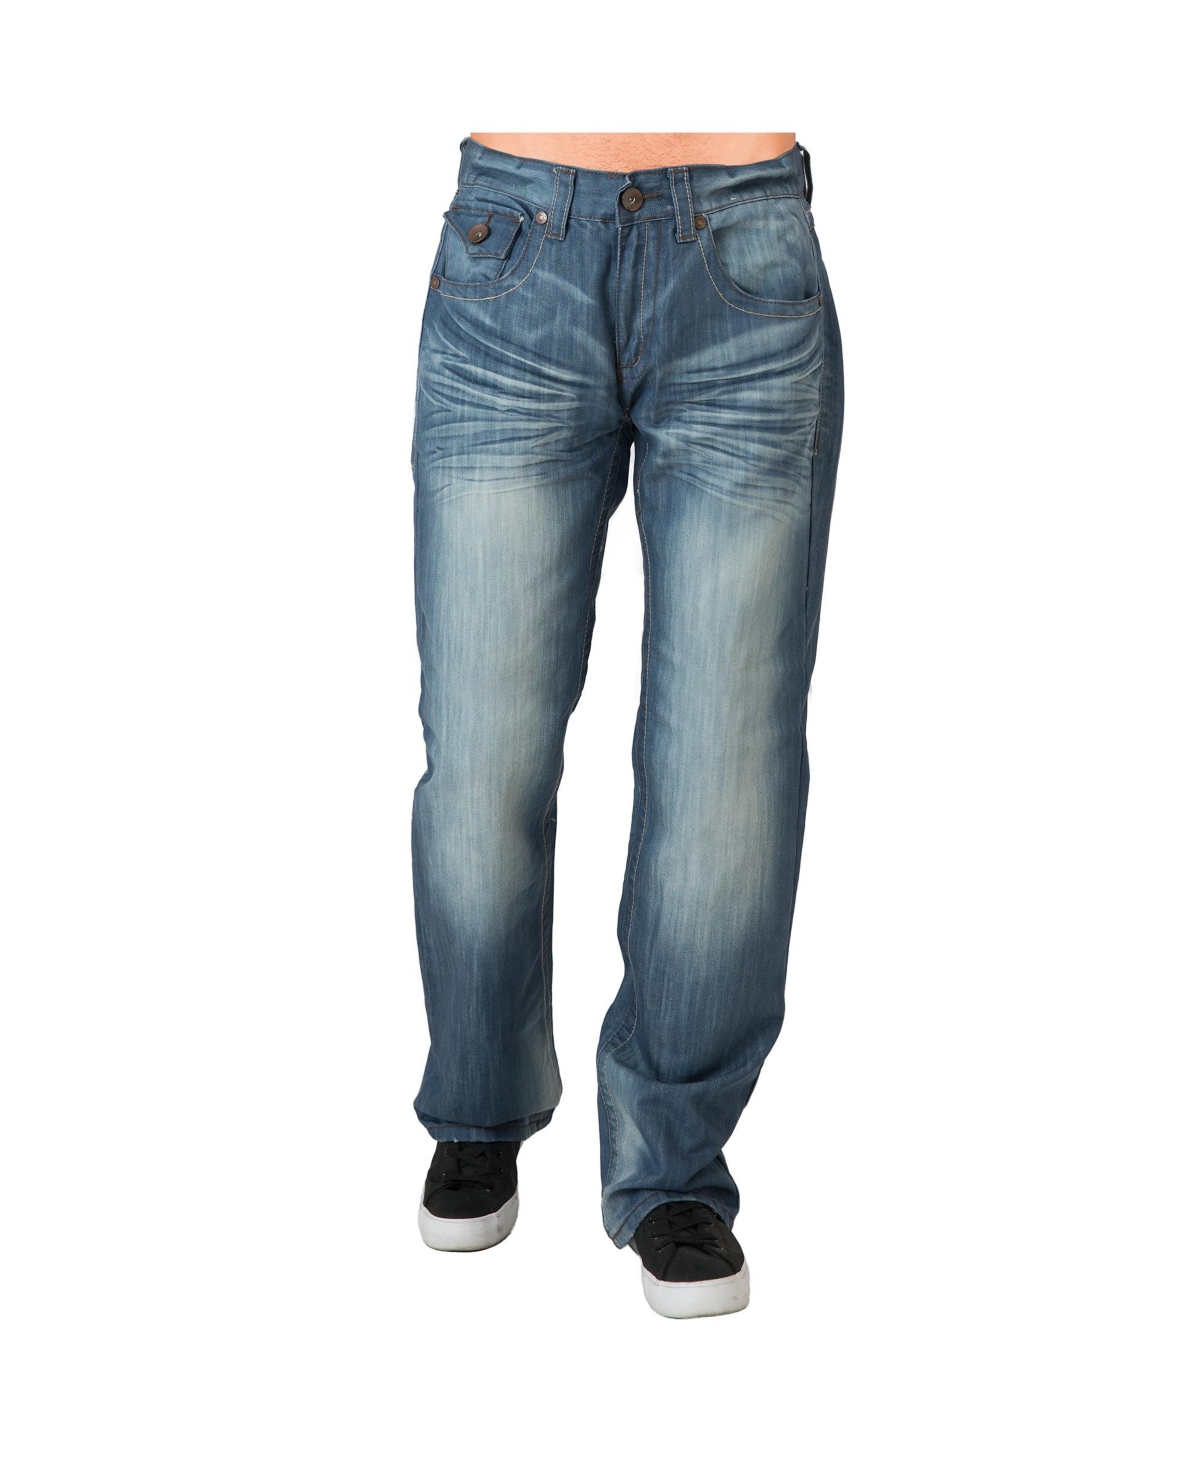 Men's Midrise Relaxed Boot cut Premium Denim Jeans Vintage Like Wash - Dark blue